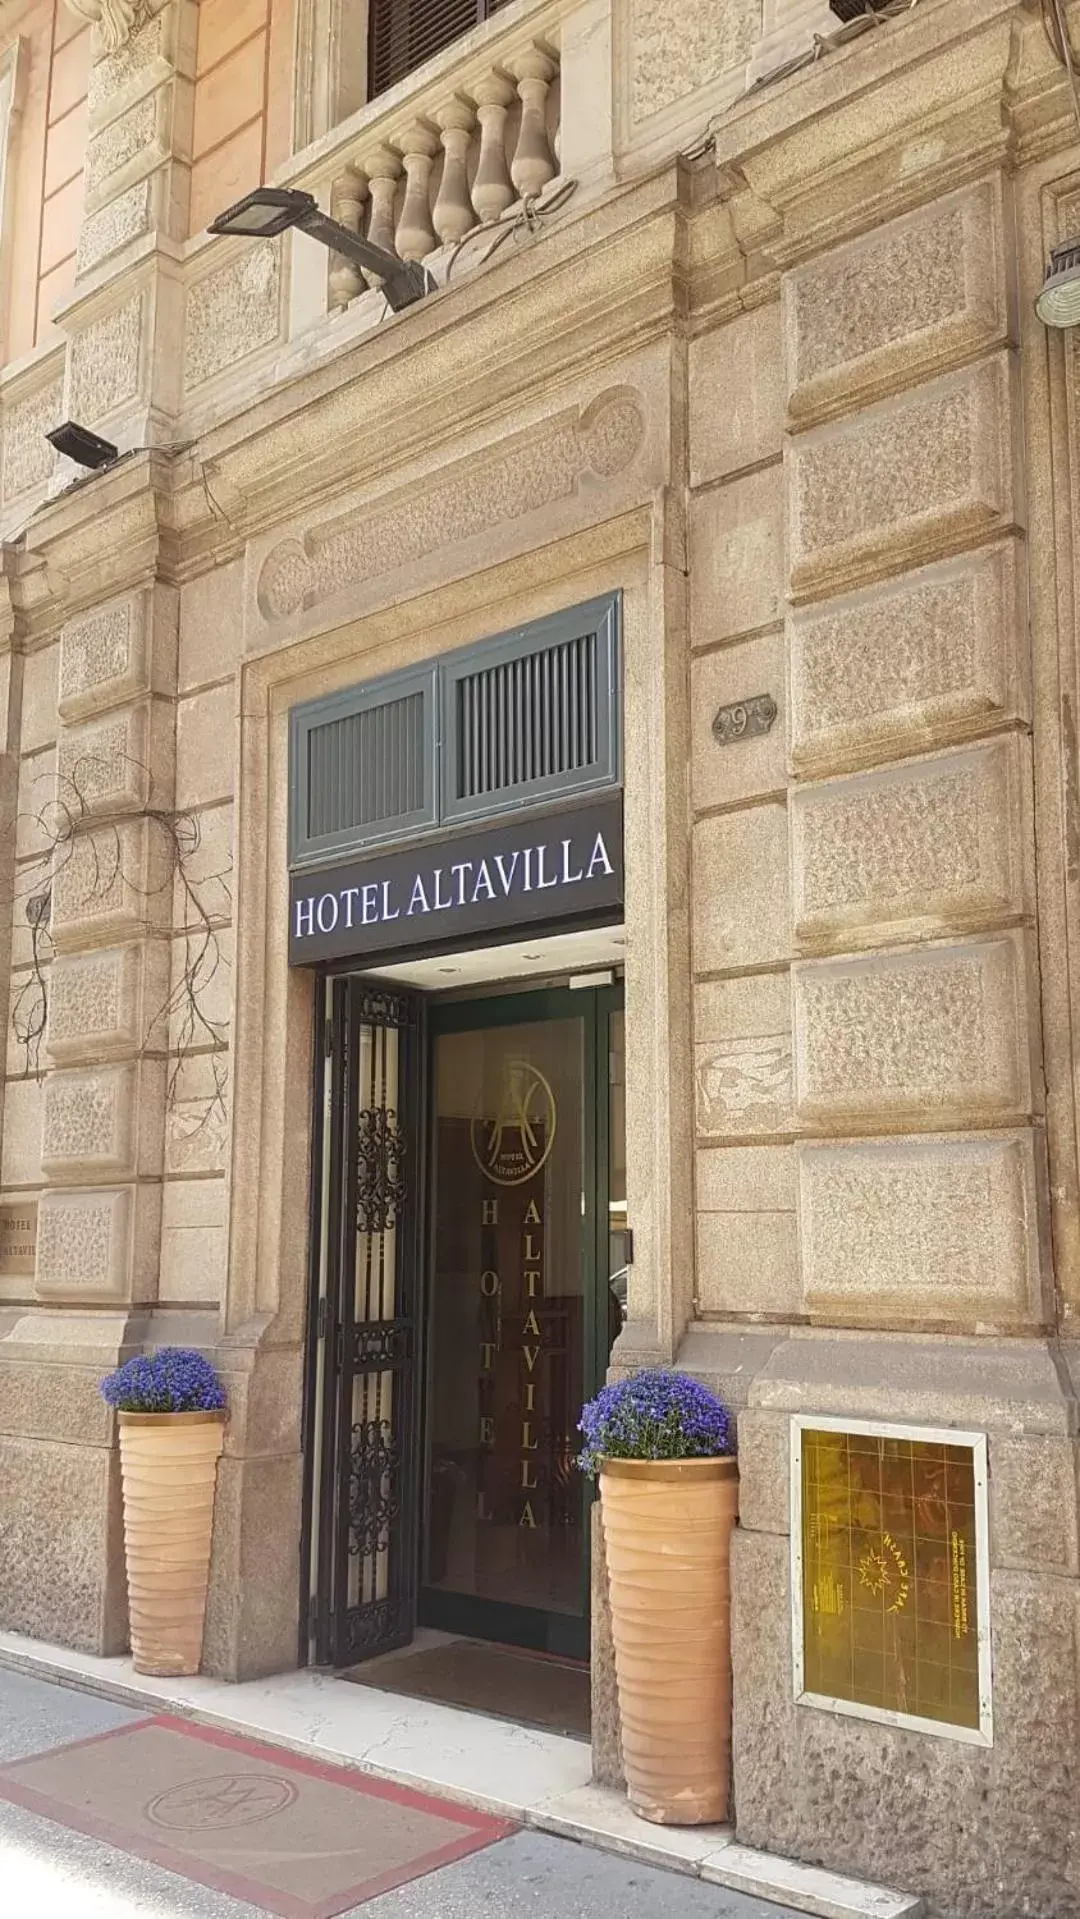 Facade/entrance in Hotel Altavilla